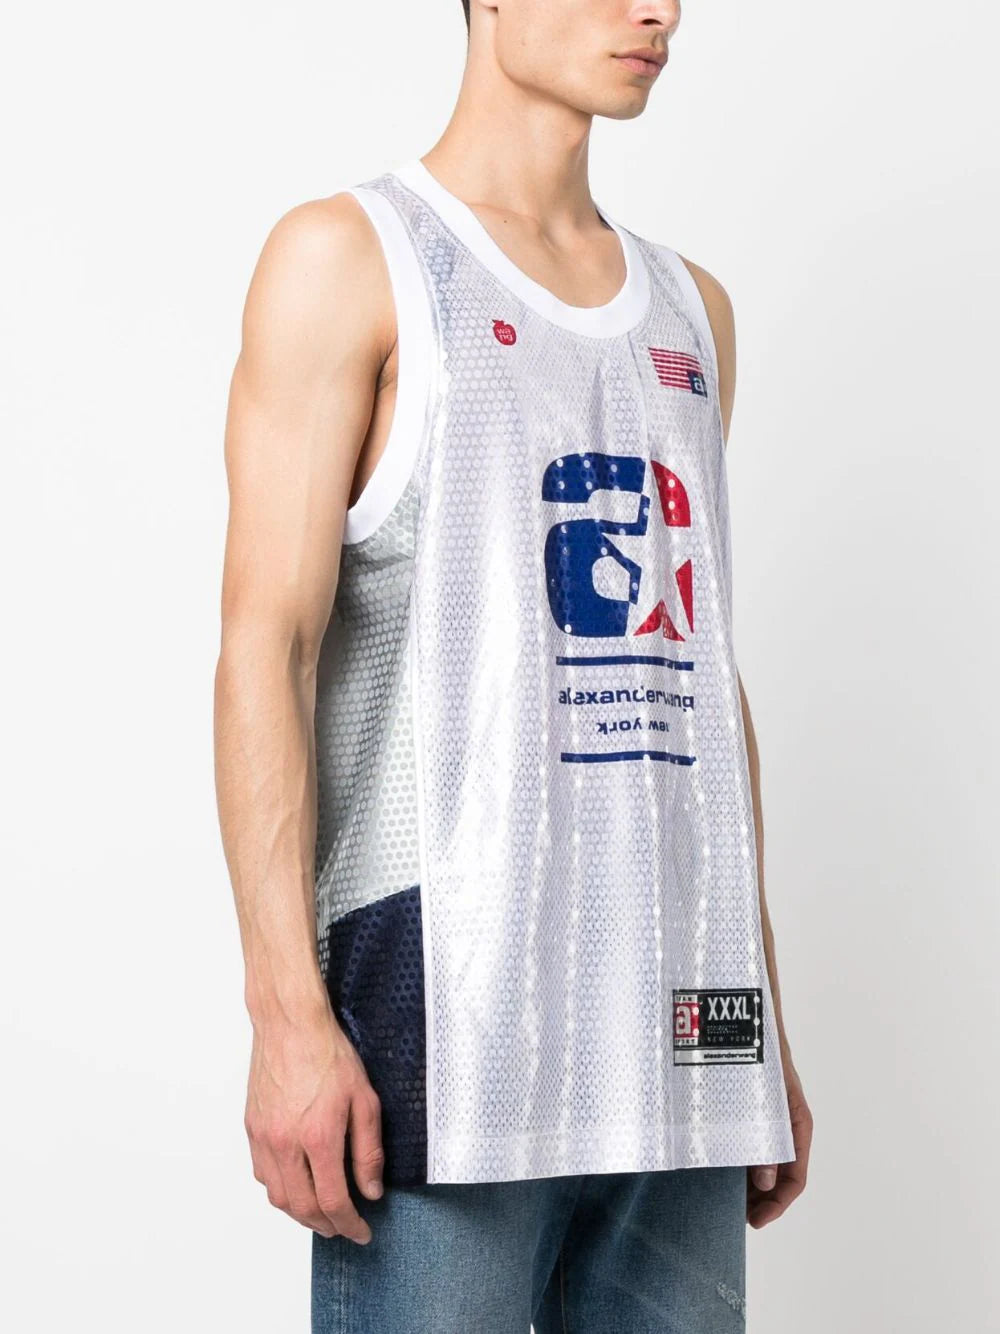 ALEXANDER WANG UNISEX Basketball Sequins Tank Top White/Multicolour - MAISONDEFASHION.COM